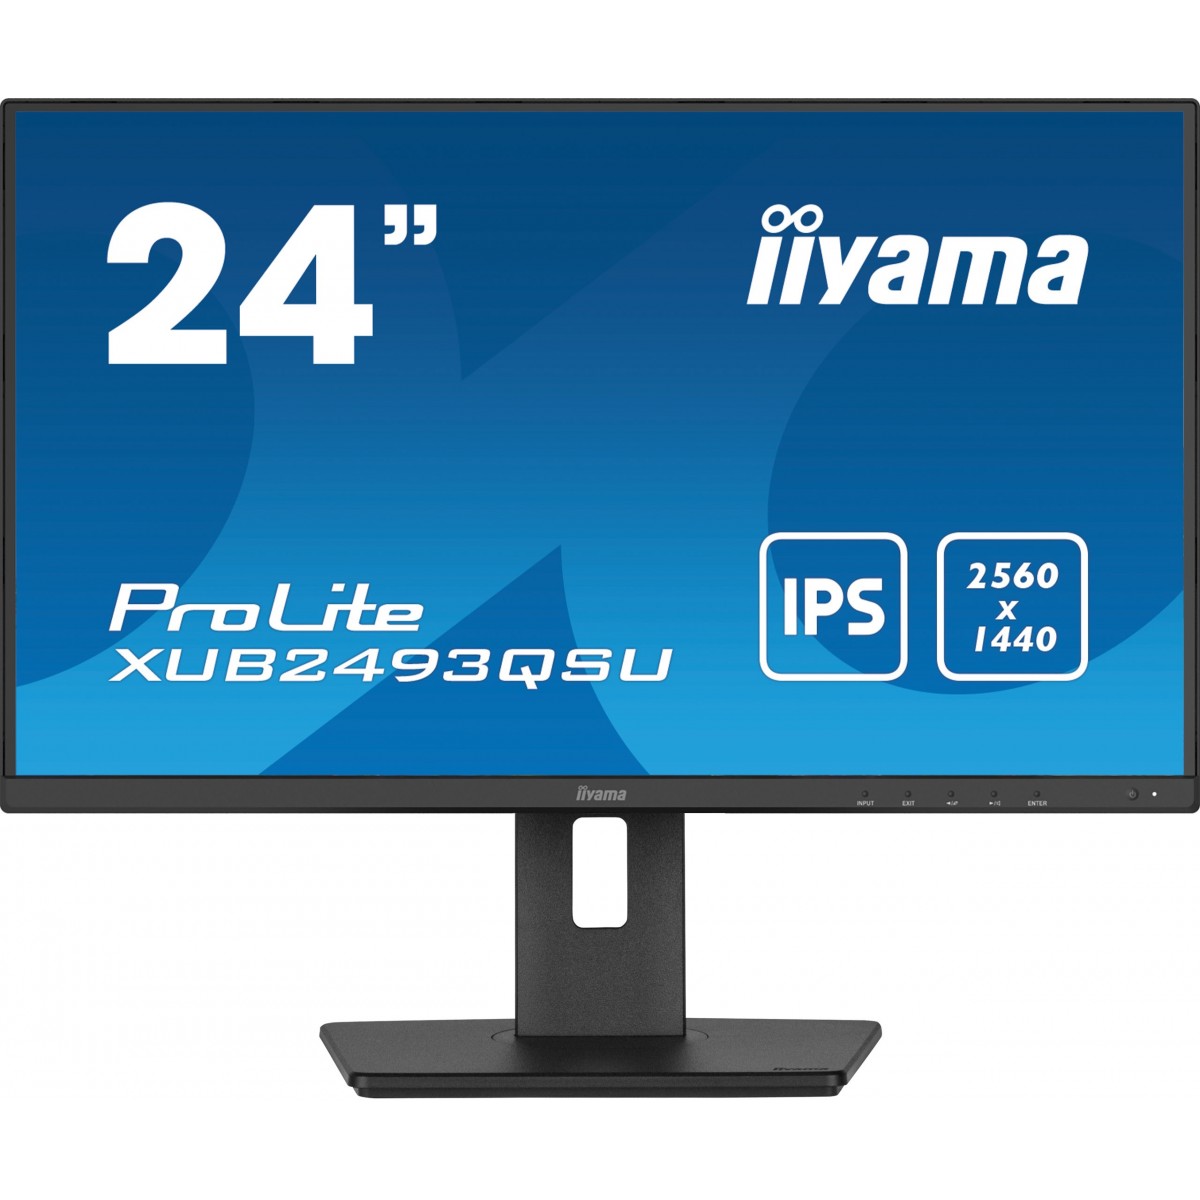 Iiyama 24W LCD Business WQHD IPS - Flat Screen - 24